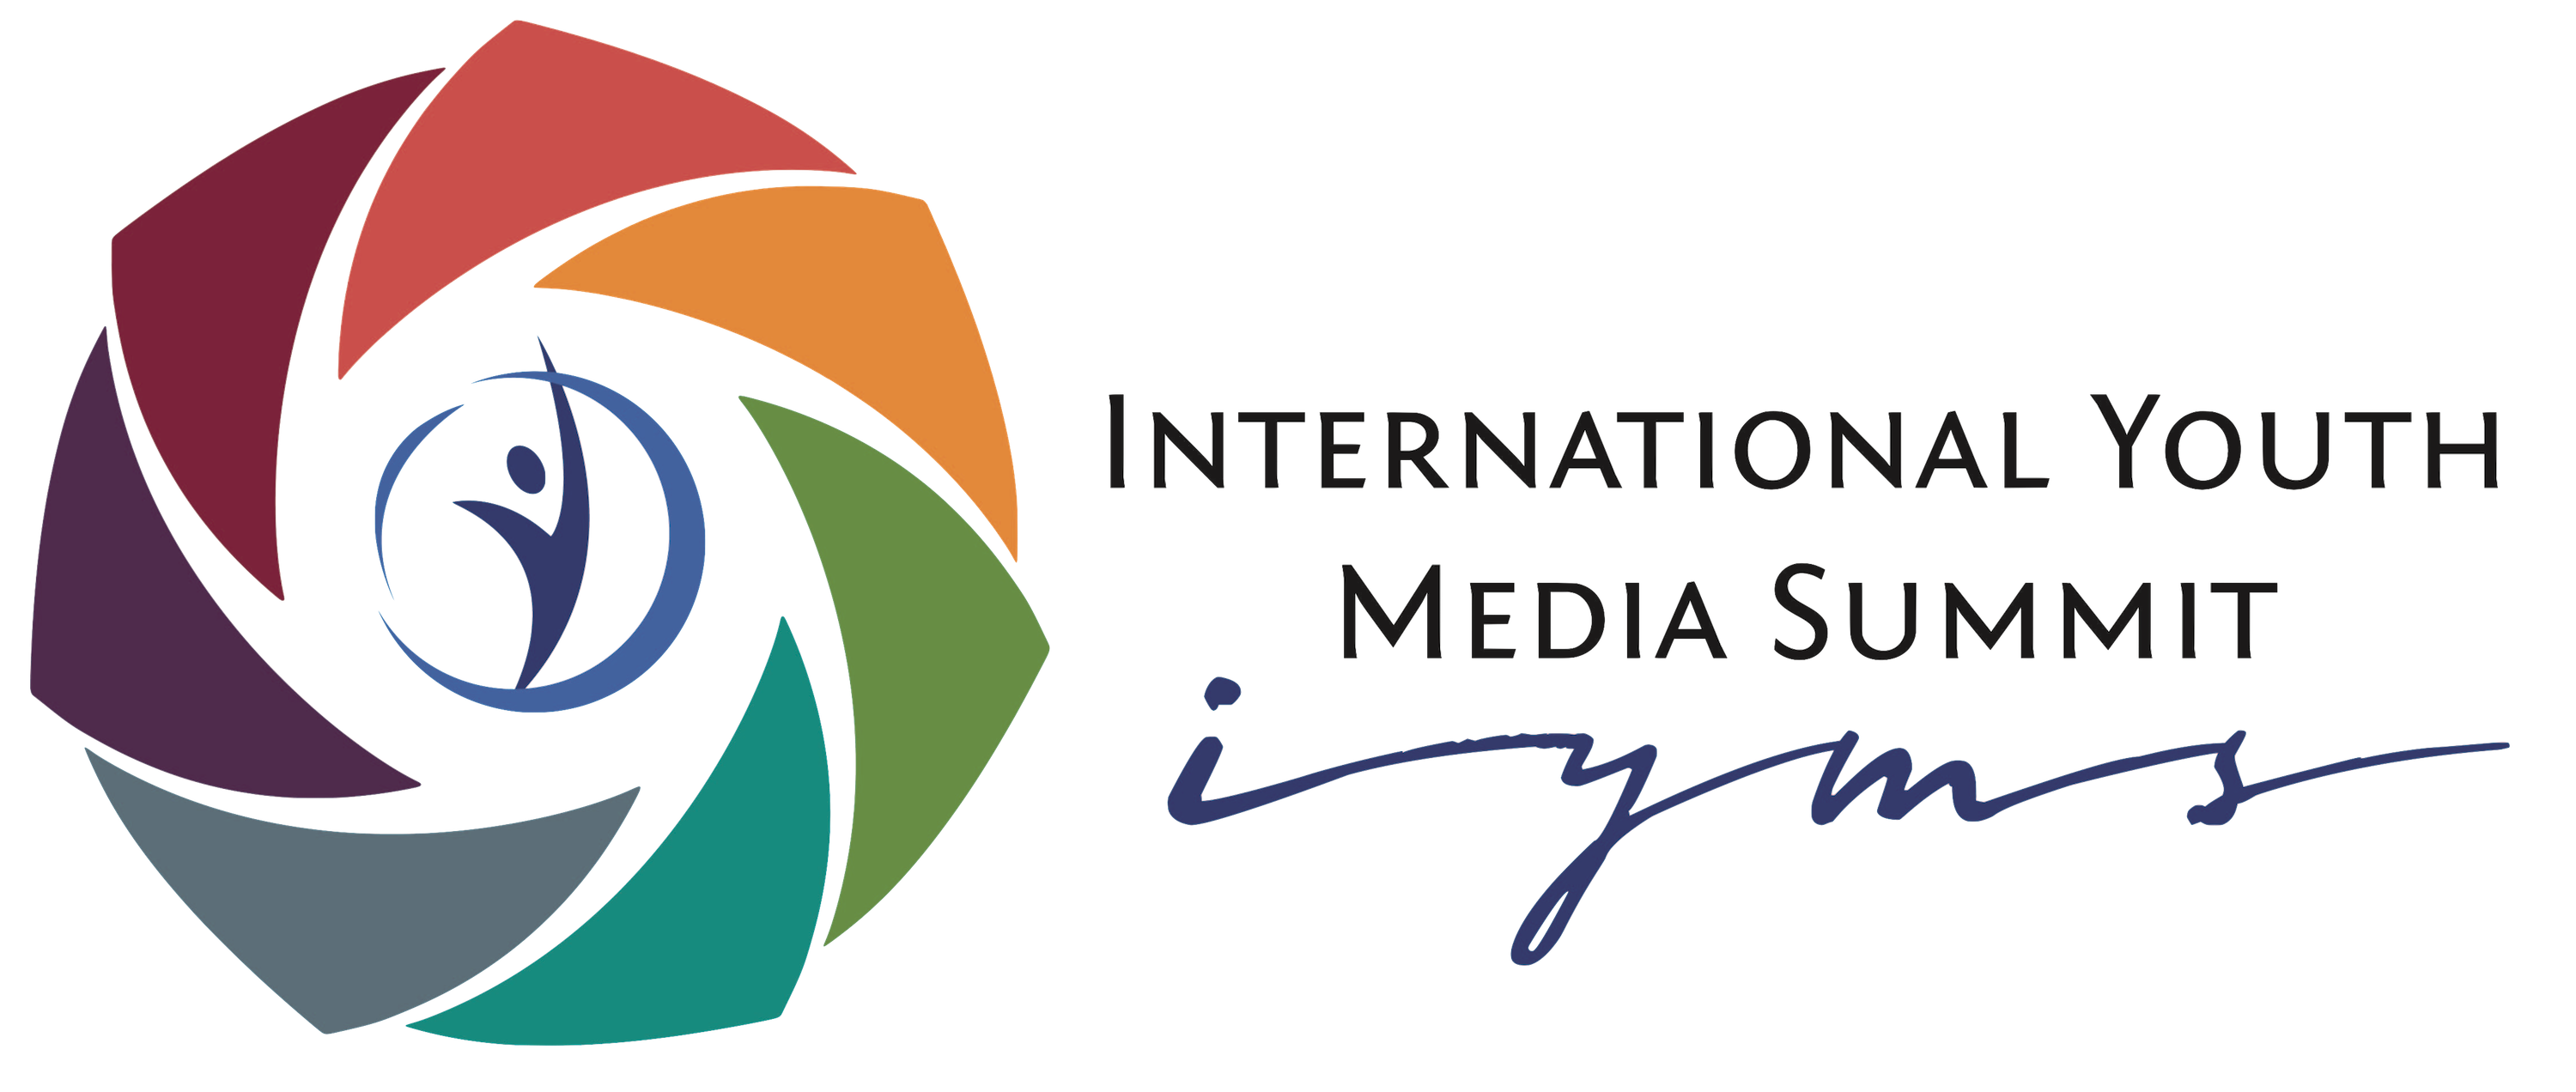 International Youth Media Summit logo